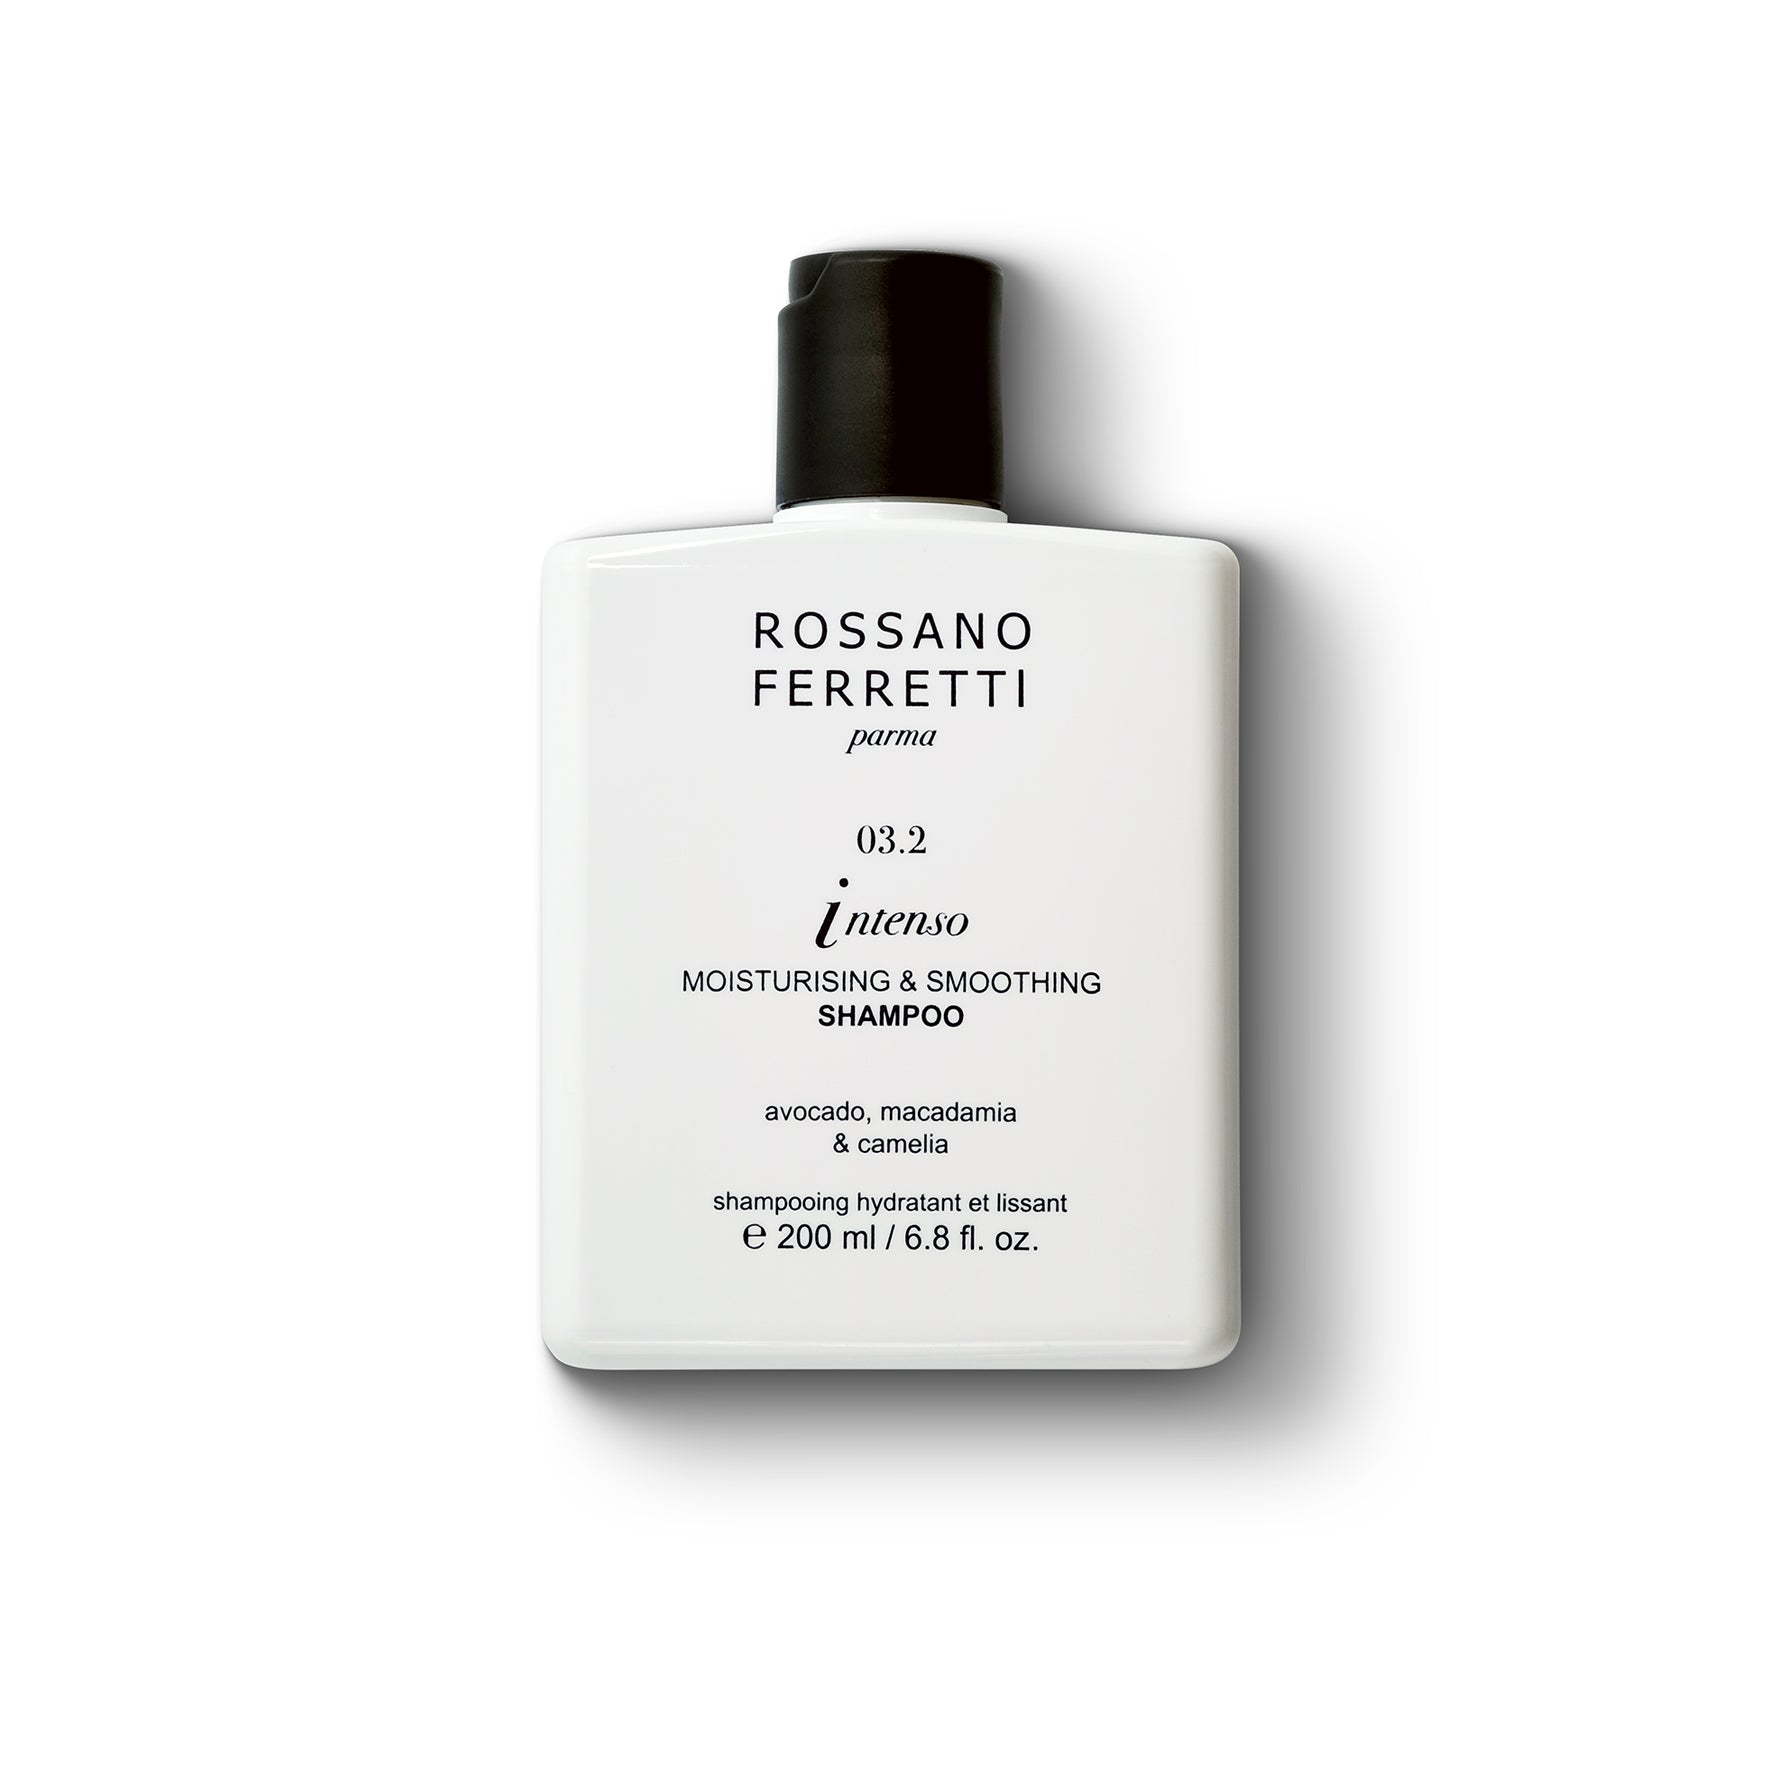 Rossano Ferretti - Intenso Moisturising and Smoothing Shampoo